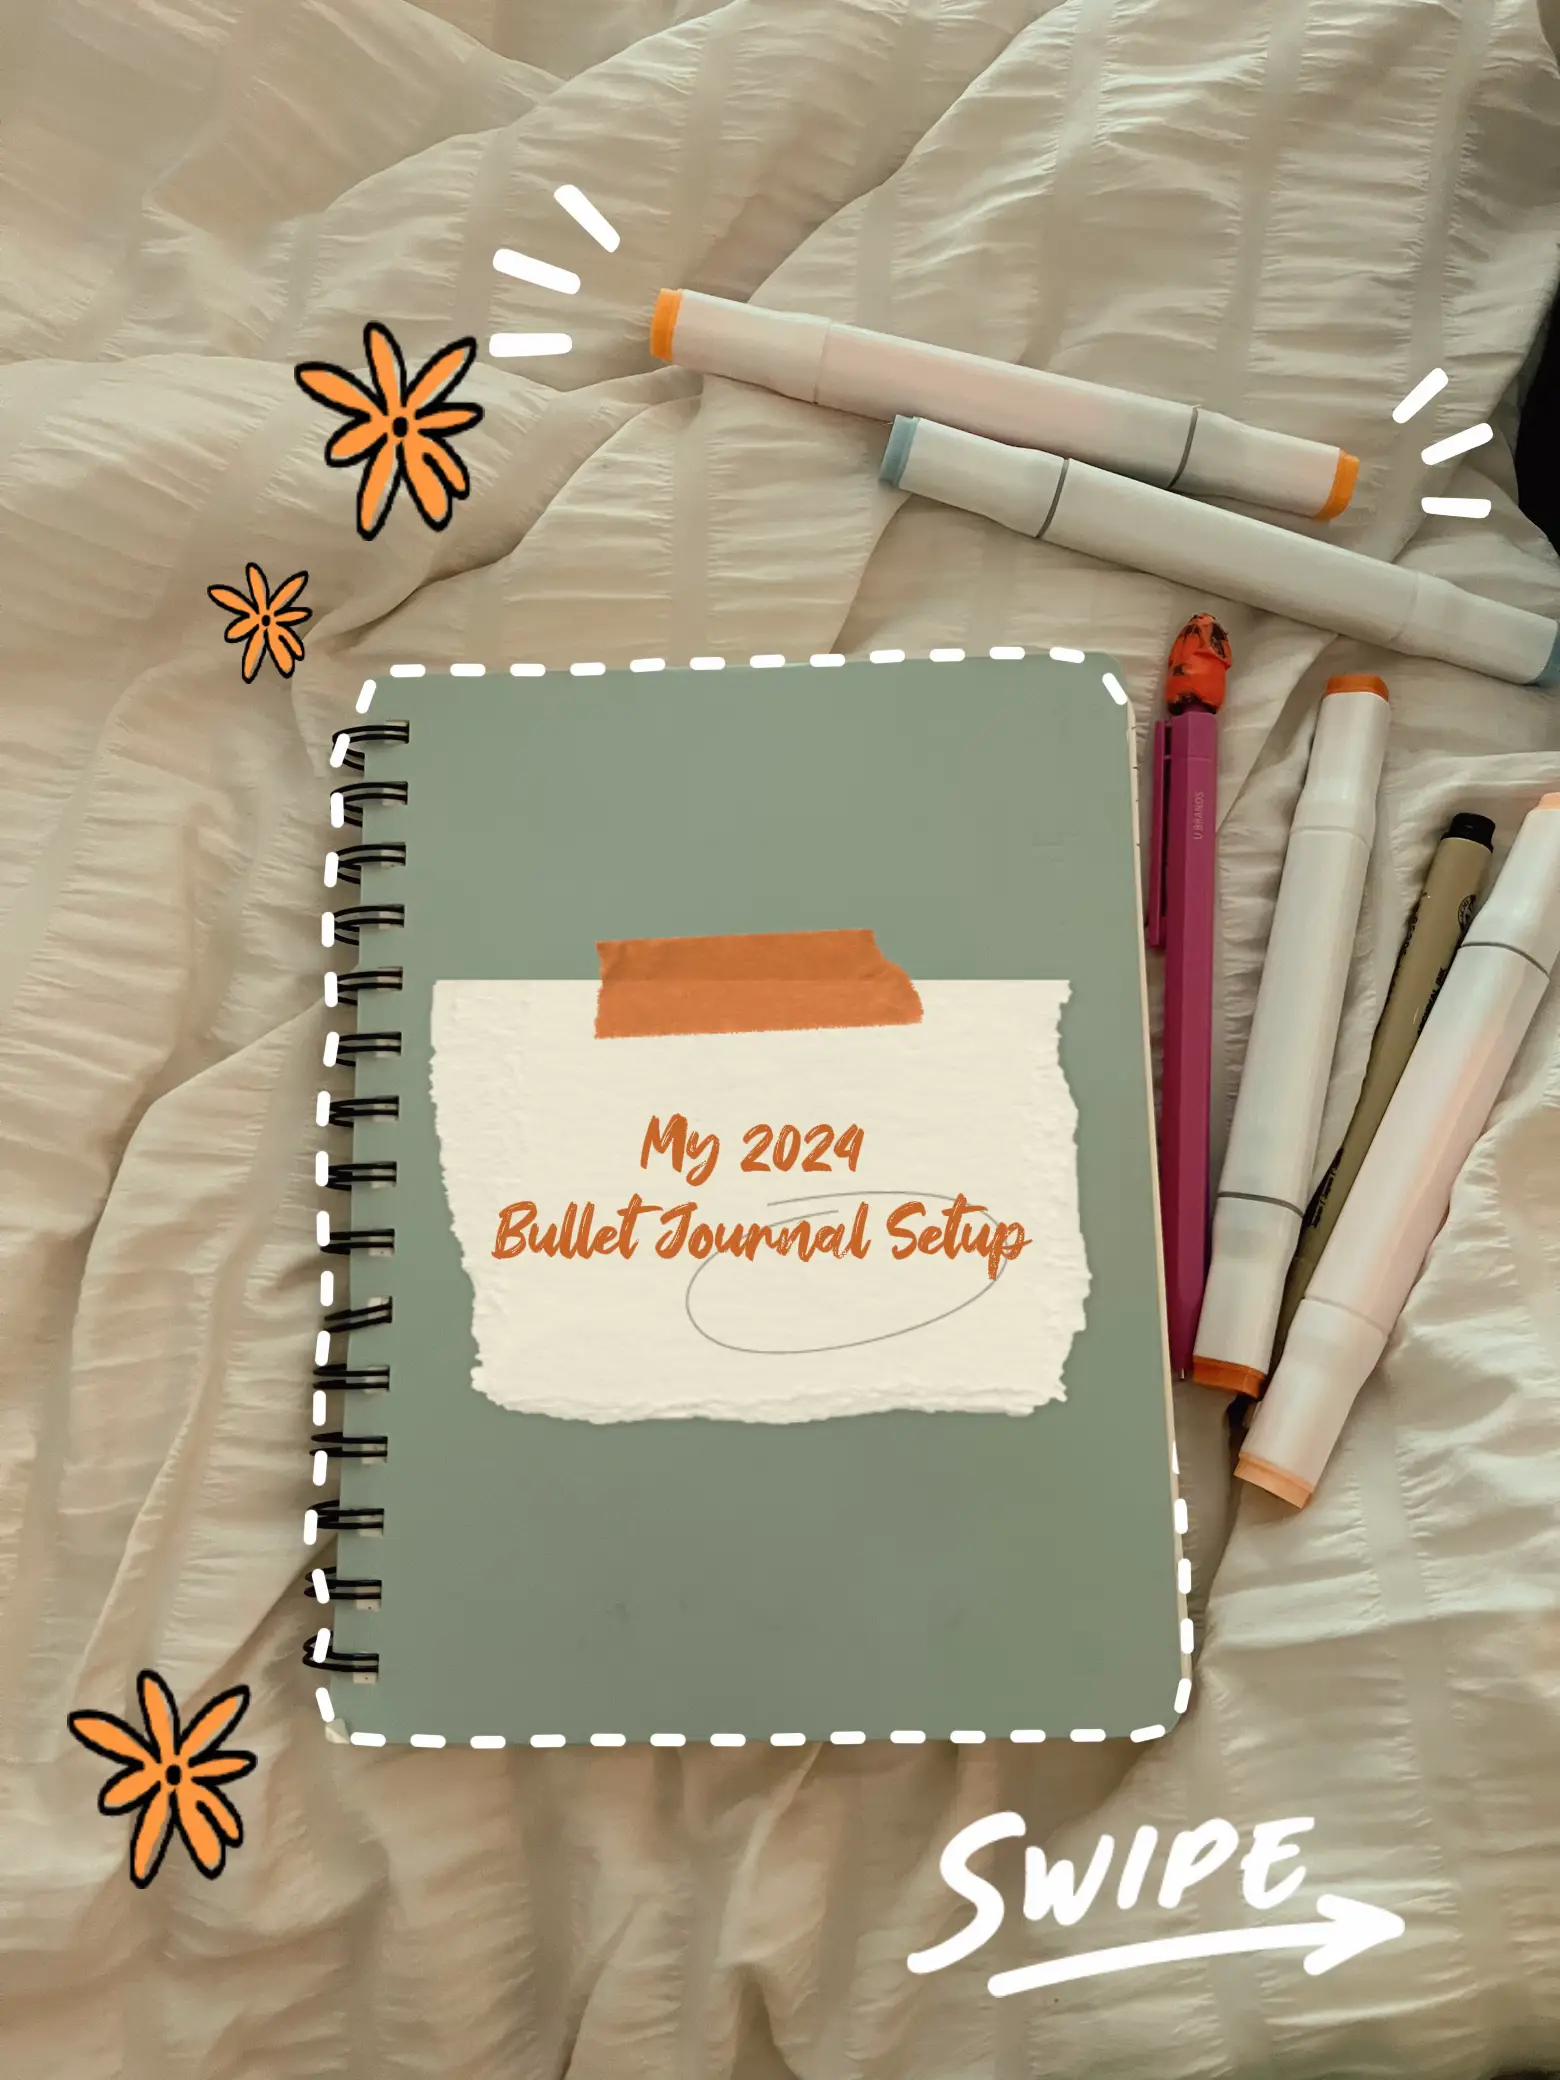 2023-2024 Fresh Yearly Setup | Digital Bullet Journal Theme